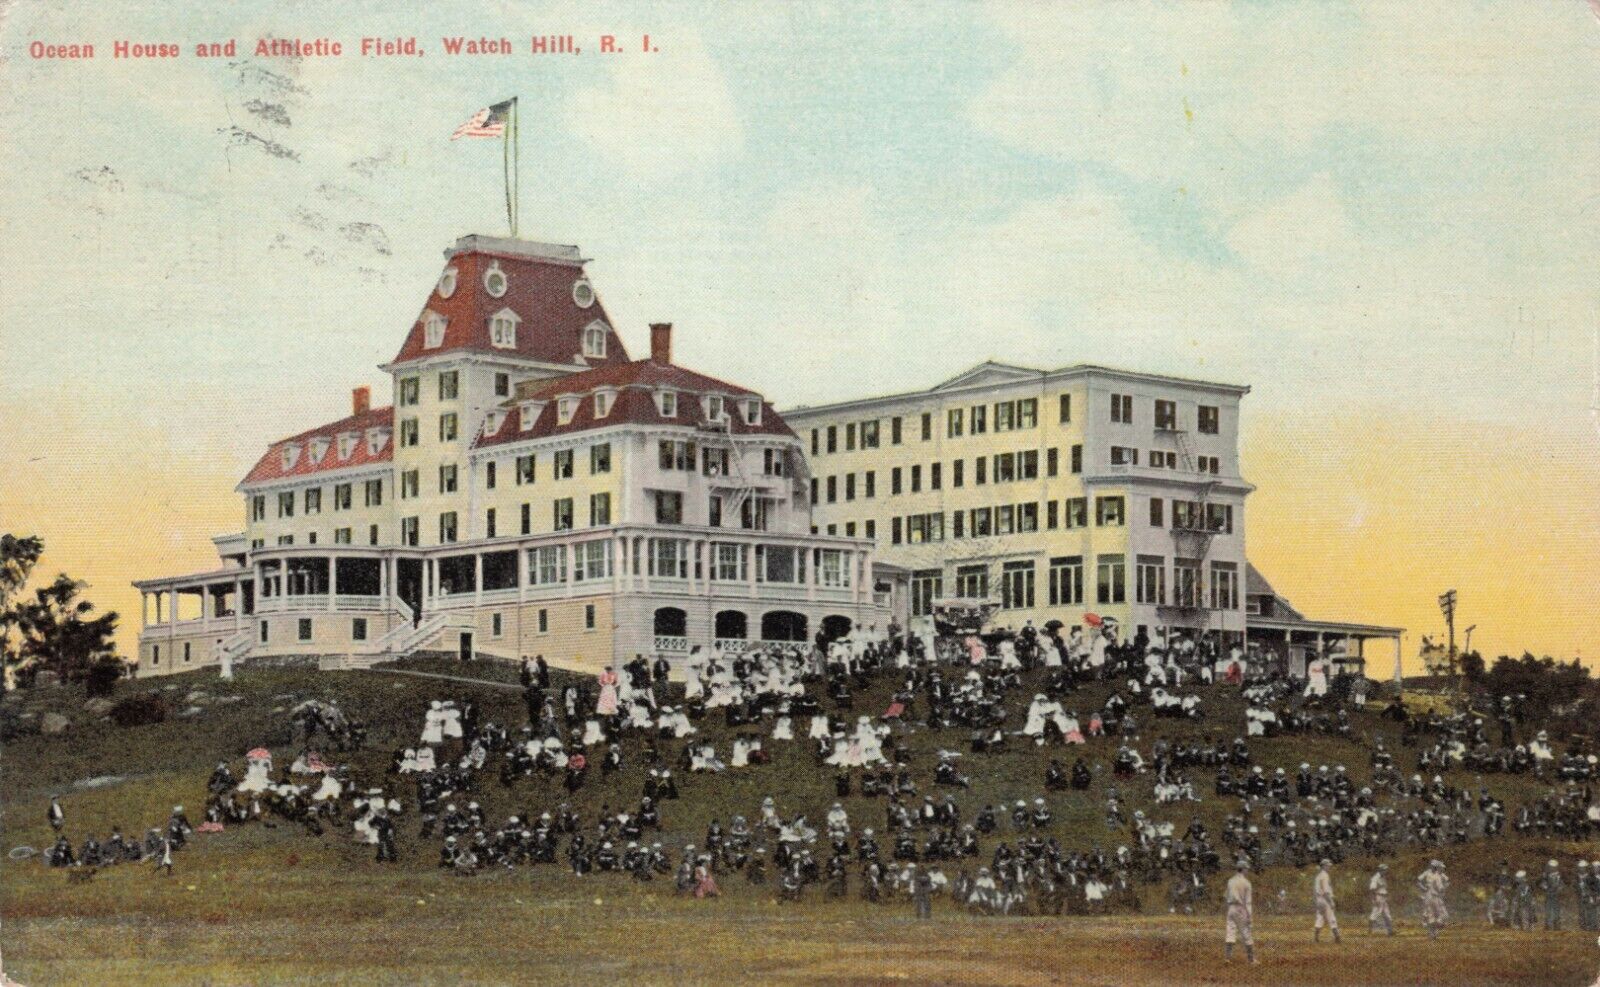 Watch Hill RI Ocean House Athletic Field Baseball Players Crowd Postcard 1910